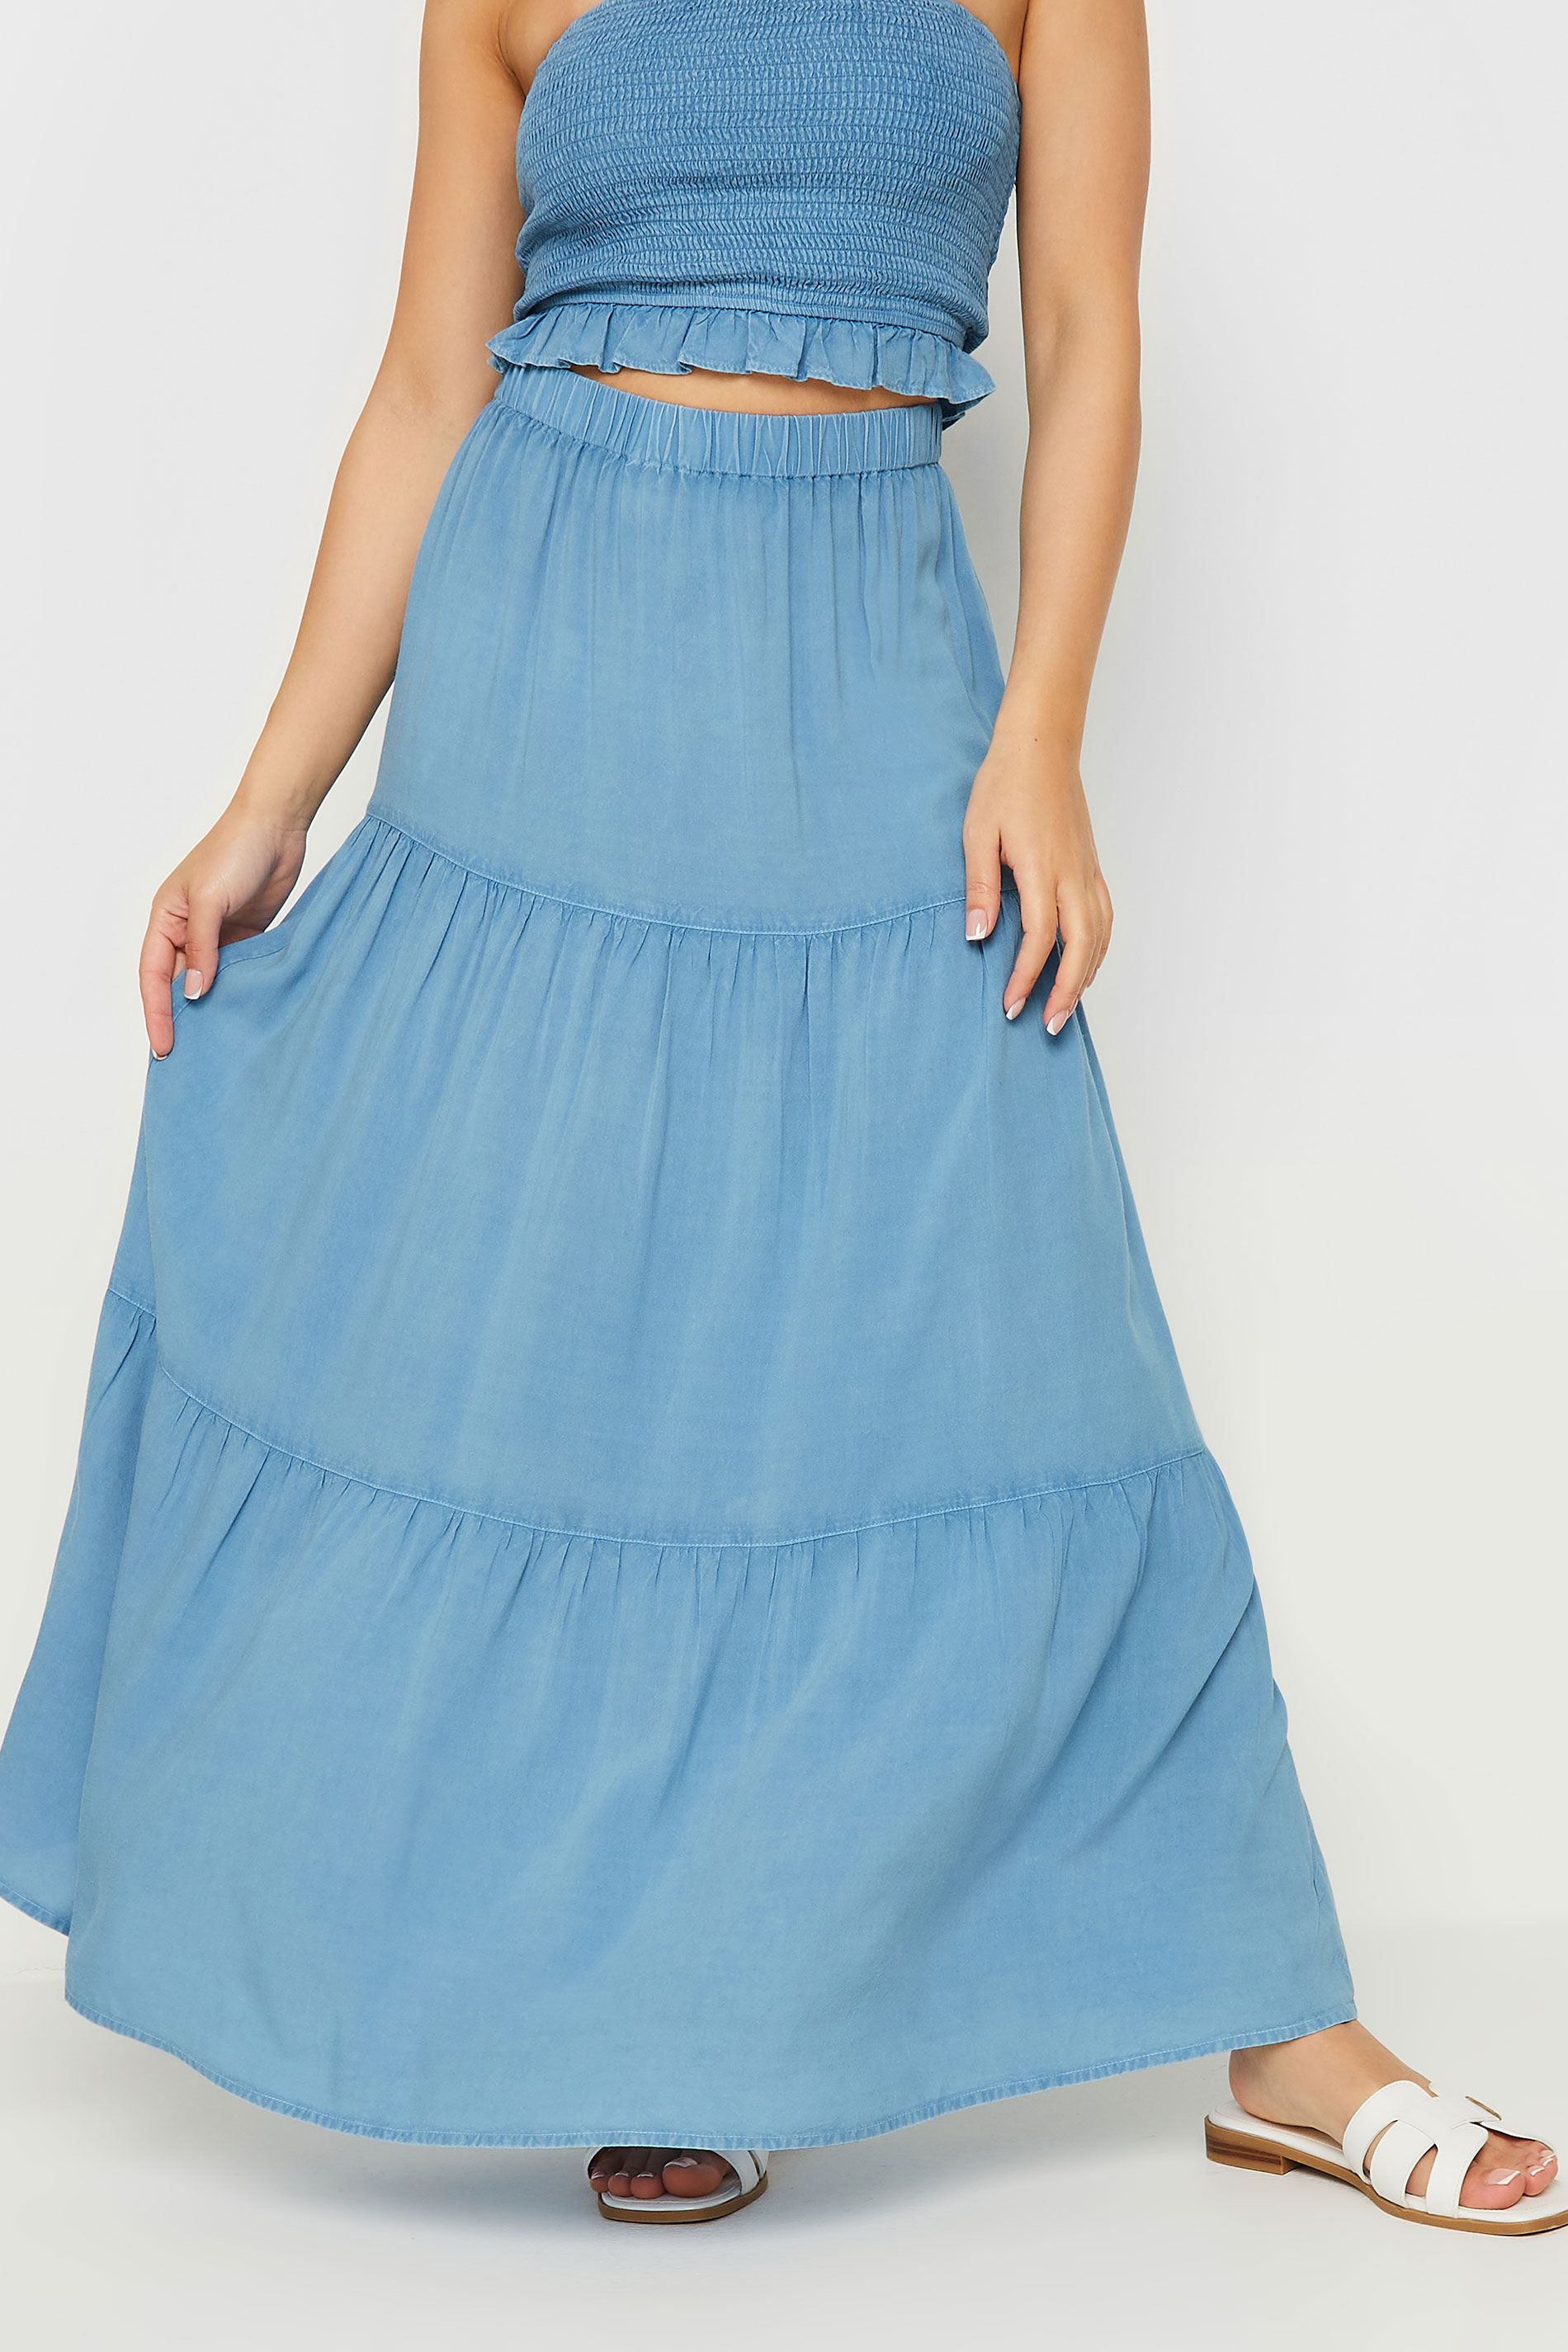 PixieGirl Petite Women's Blue Chambray Tiered Maxi Skirt | PixieGirl 2